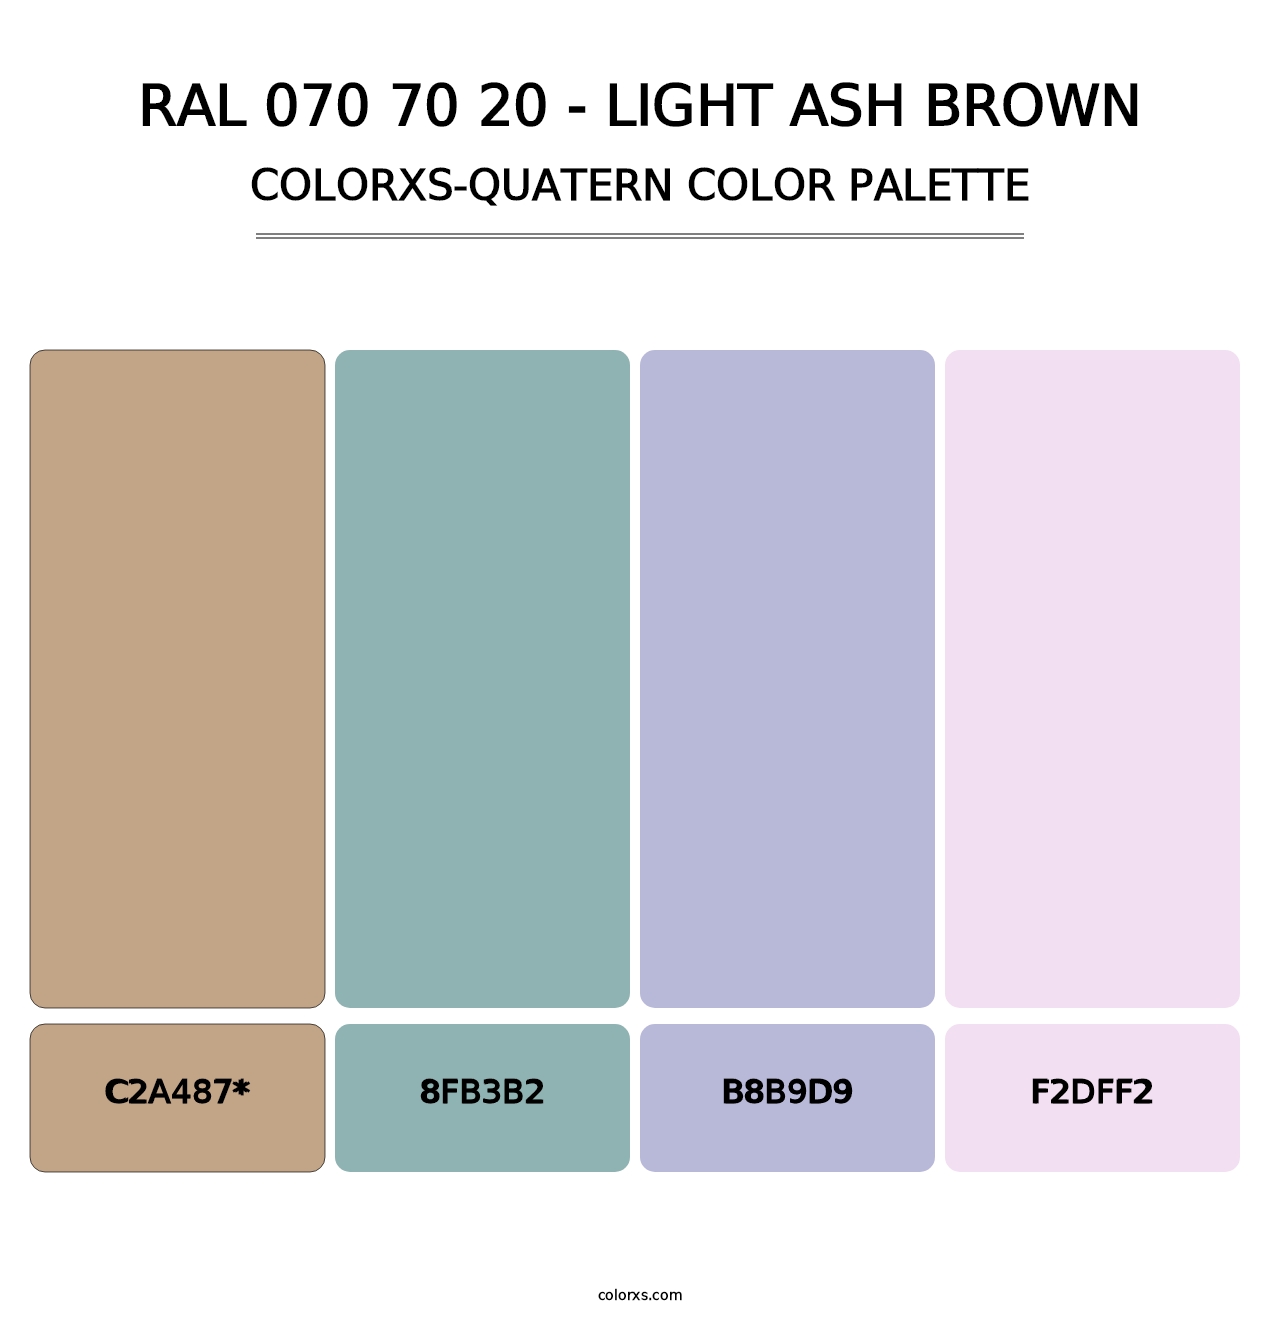 RAL 070 70 20 - Light Ash Brown - Colorxs Quatern Palette